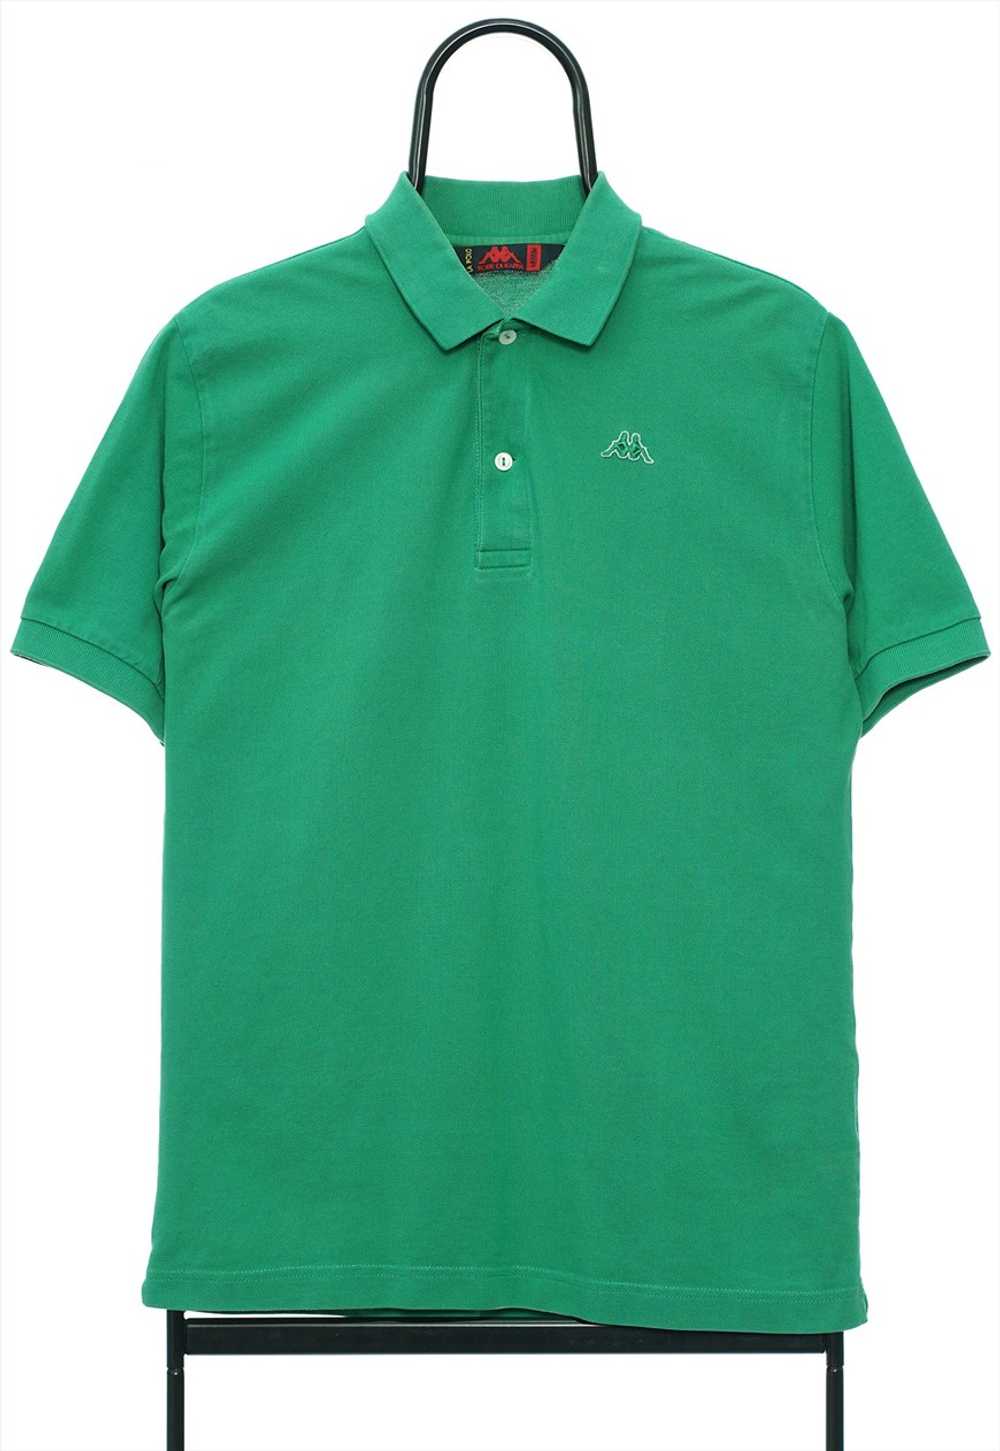 Vintage Kappa Green Polo Shirt Mens - image 1